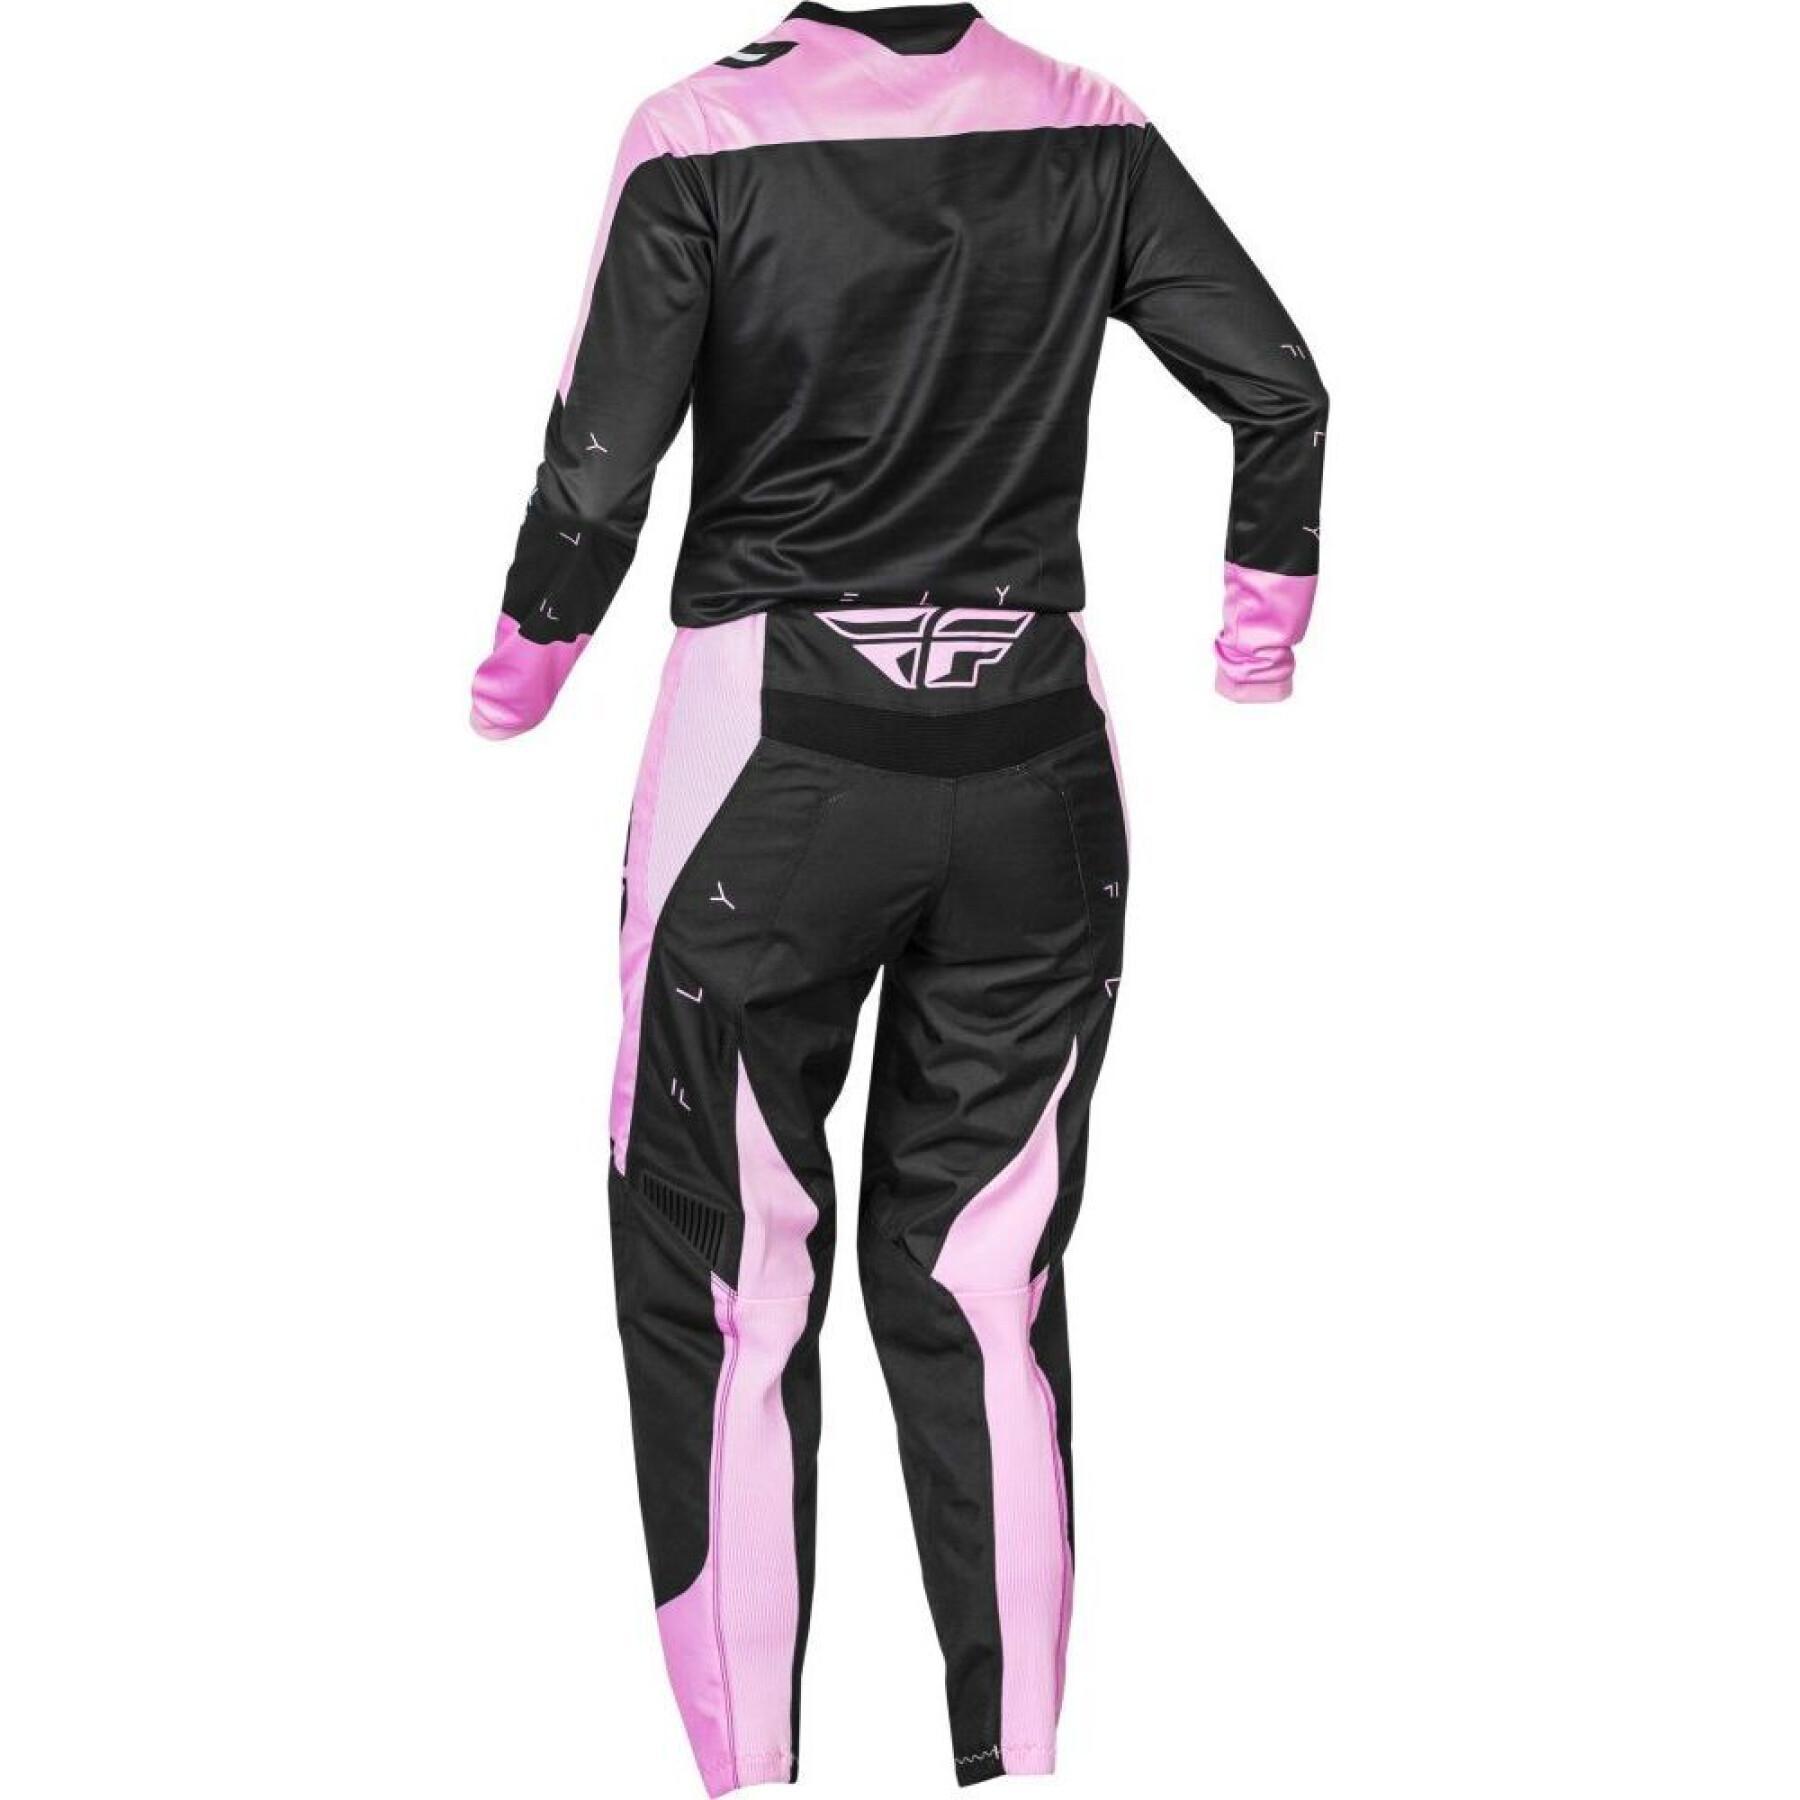 Women's motocross pants Fly Racing F-16